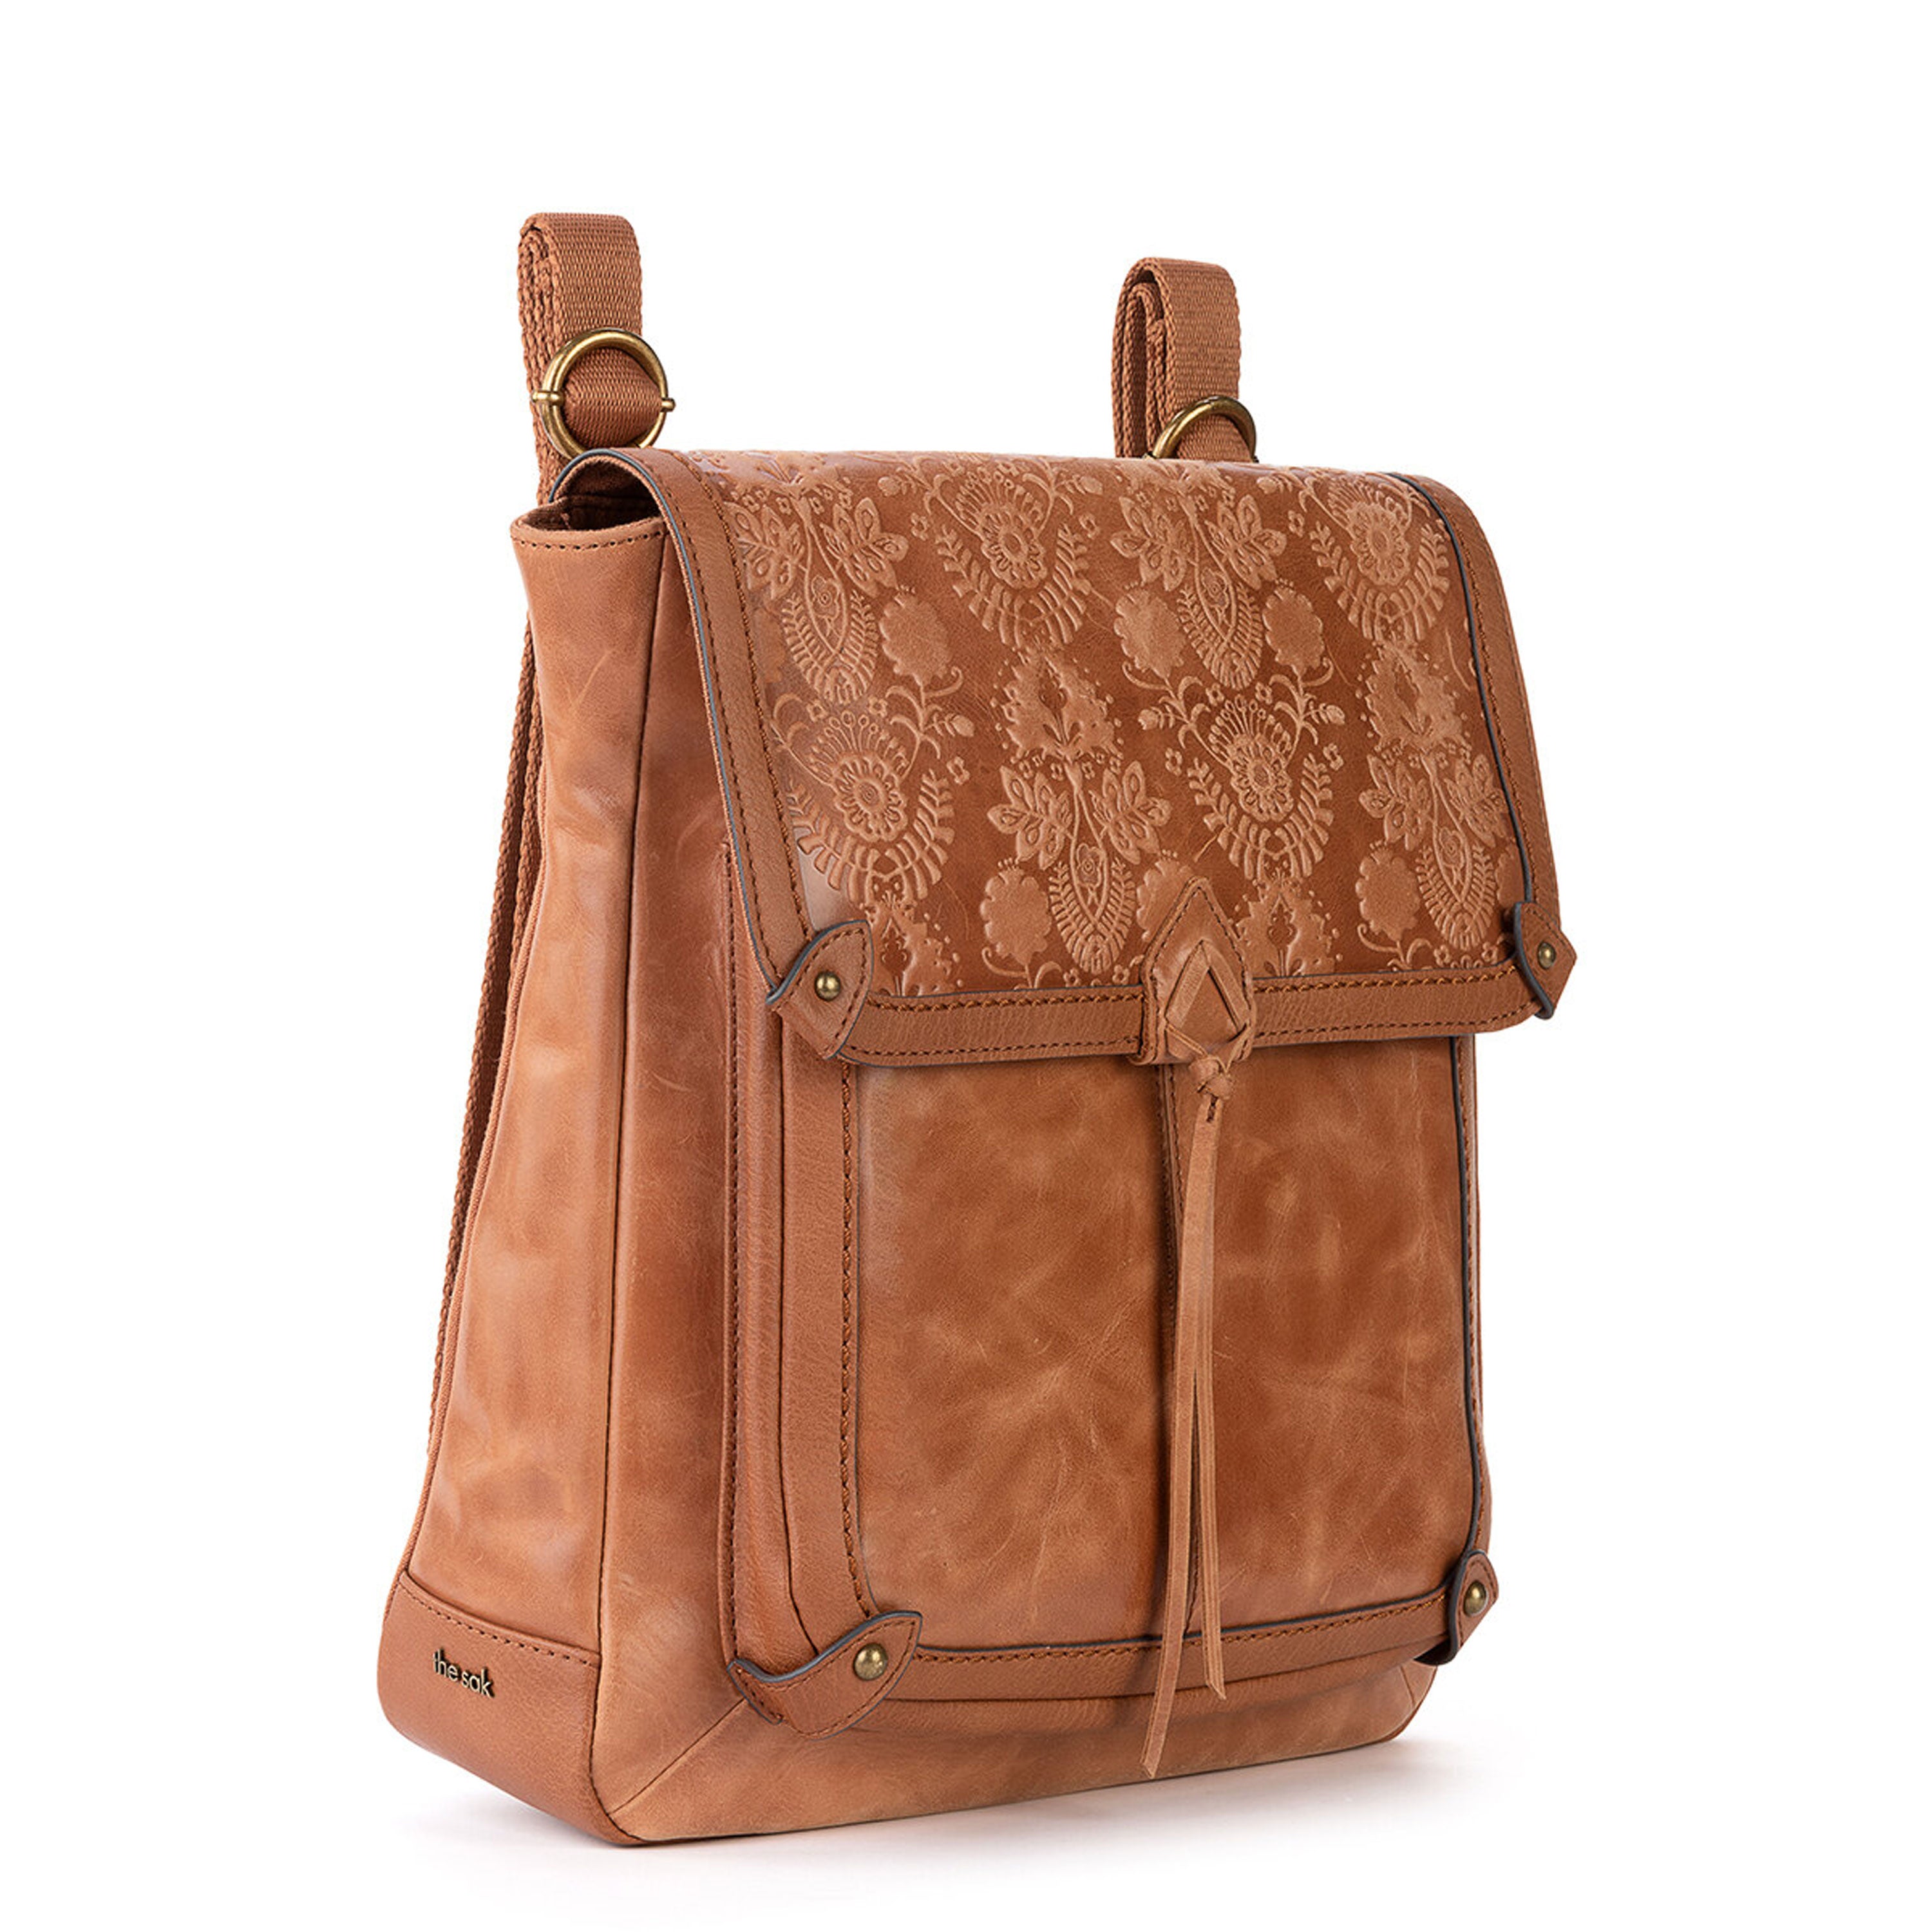 St. Tropez Backpack – Sandy Lisa